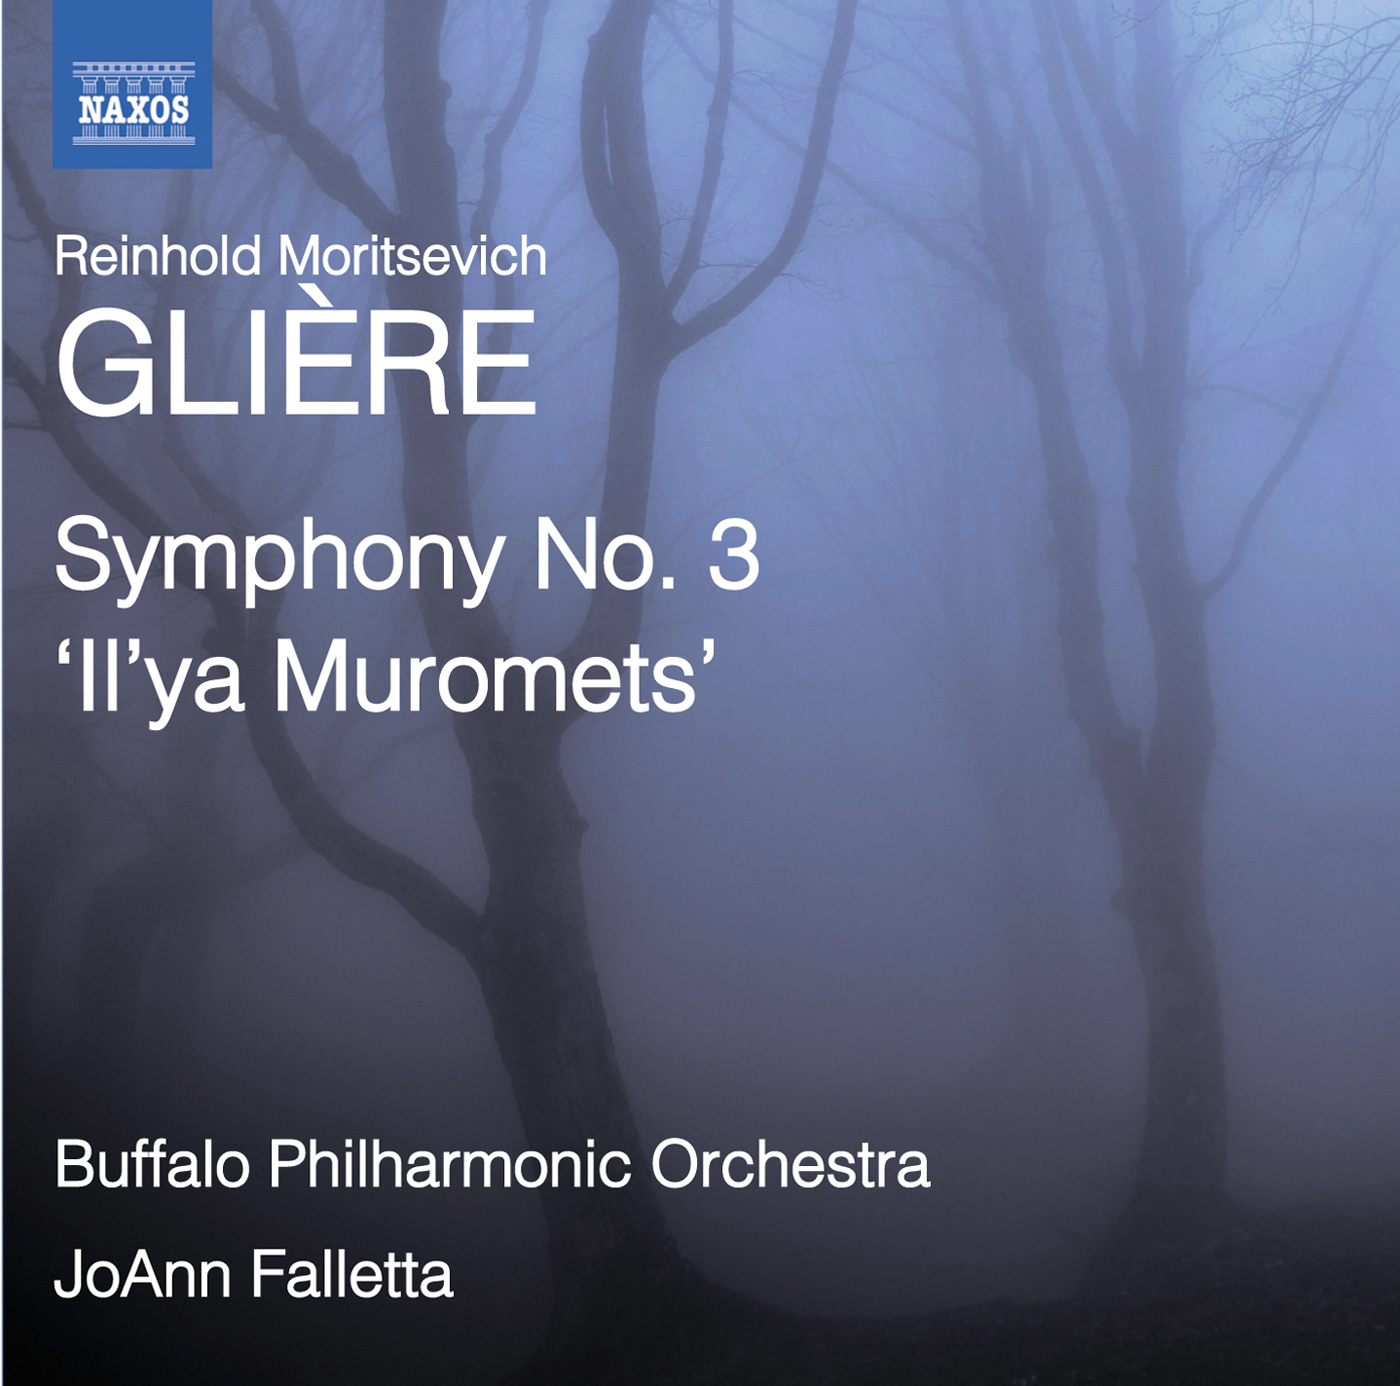 Gliere Symphony No 3 Il ya Muromets - Sleeve.png